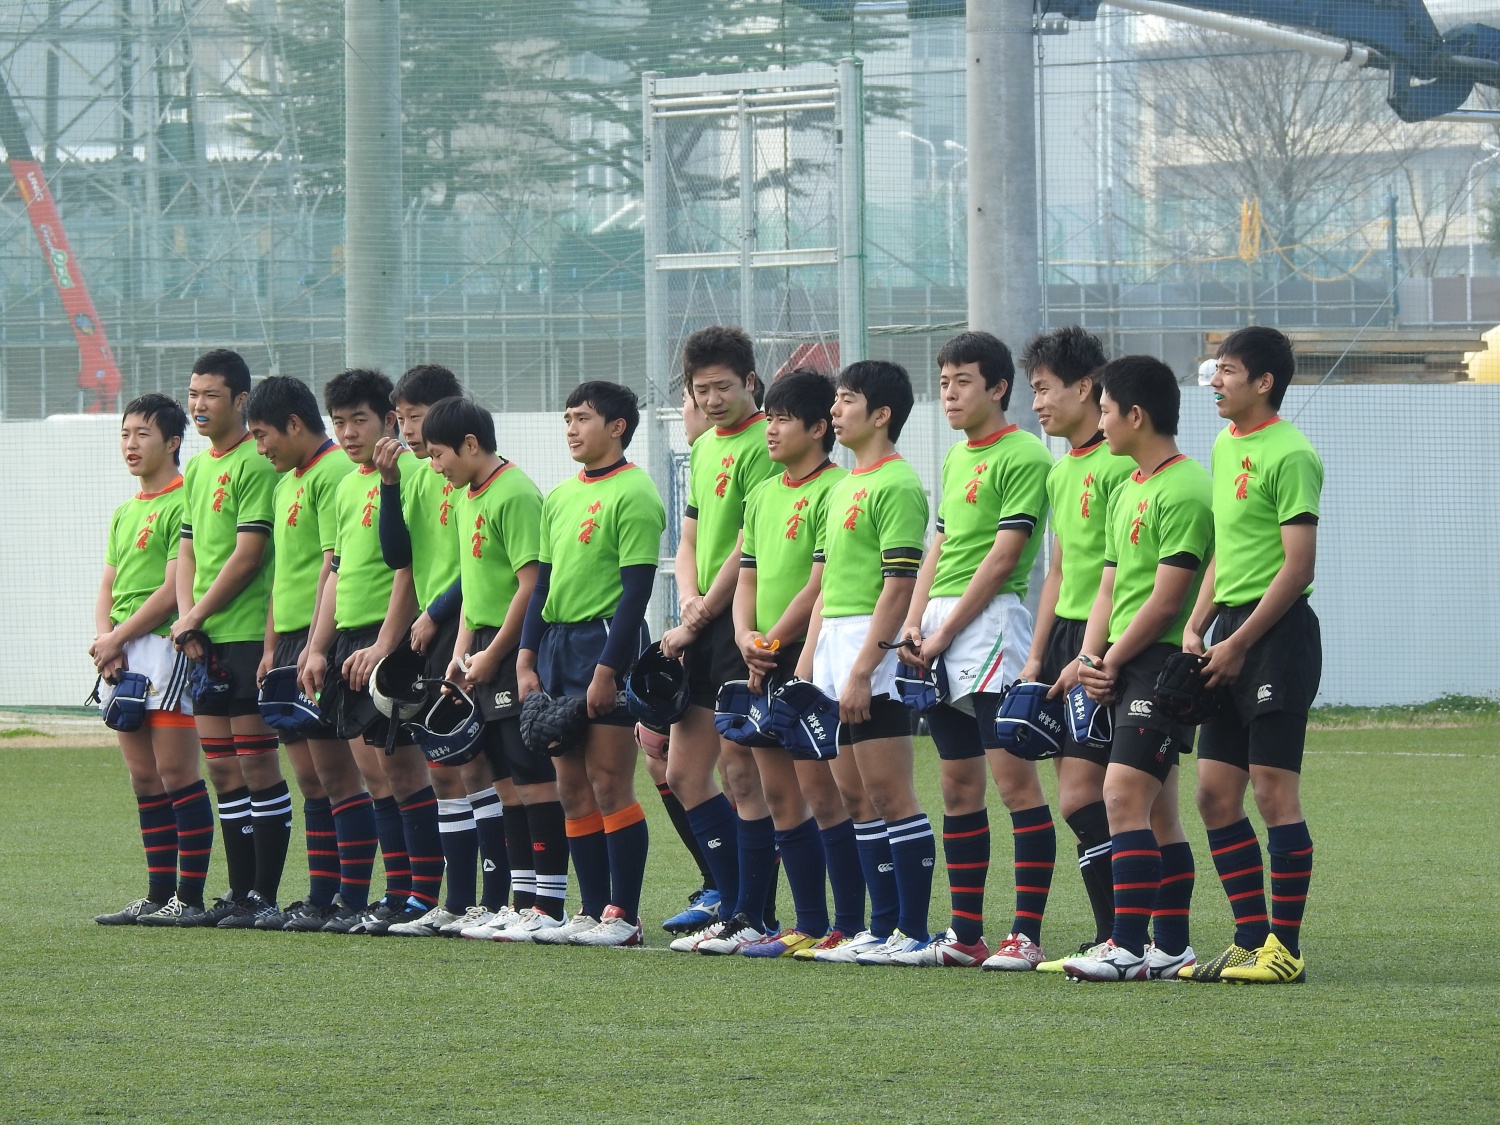 http://kokura-rugby.sakura.ne.jp/90030_xlarge.jpg